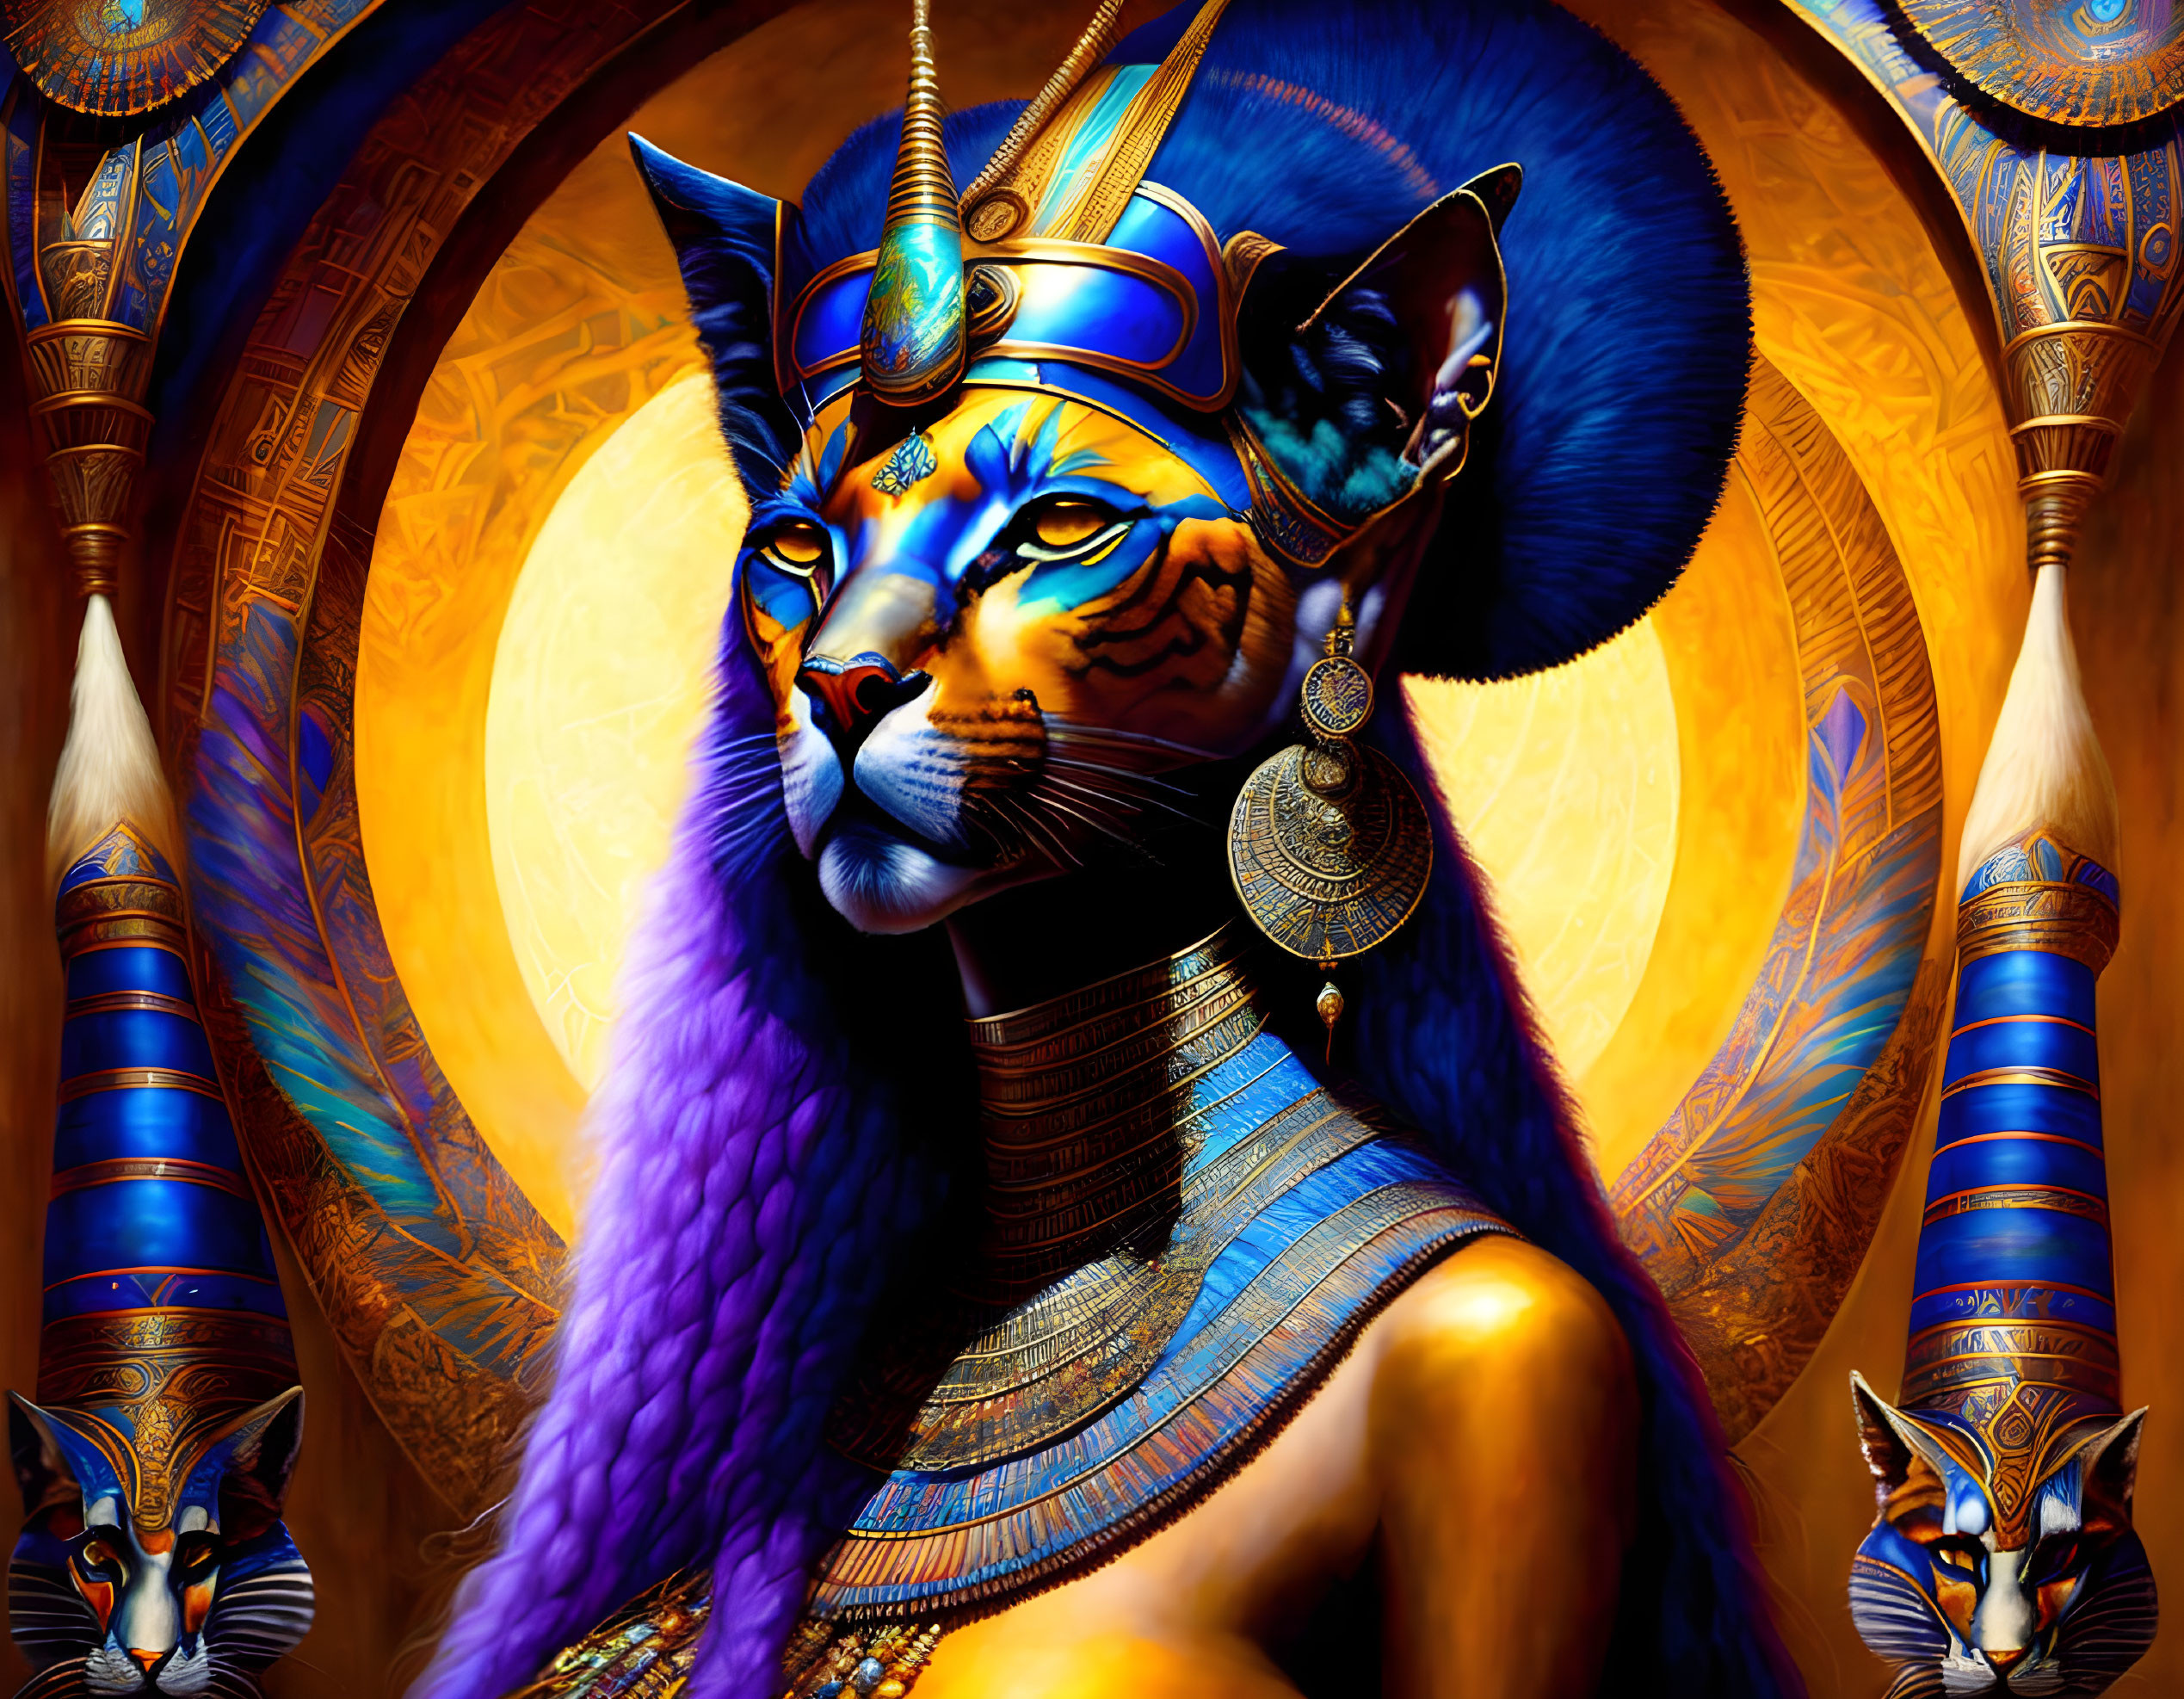 Sekhmet, is a lion-shaped Egyptian goddess